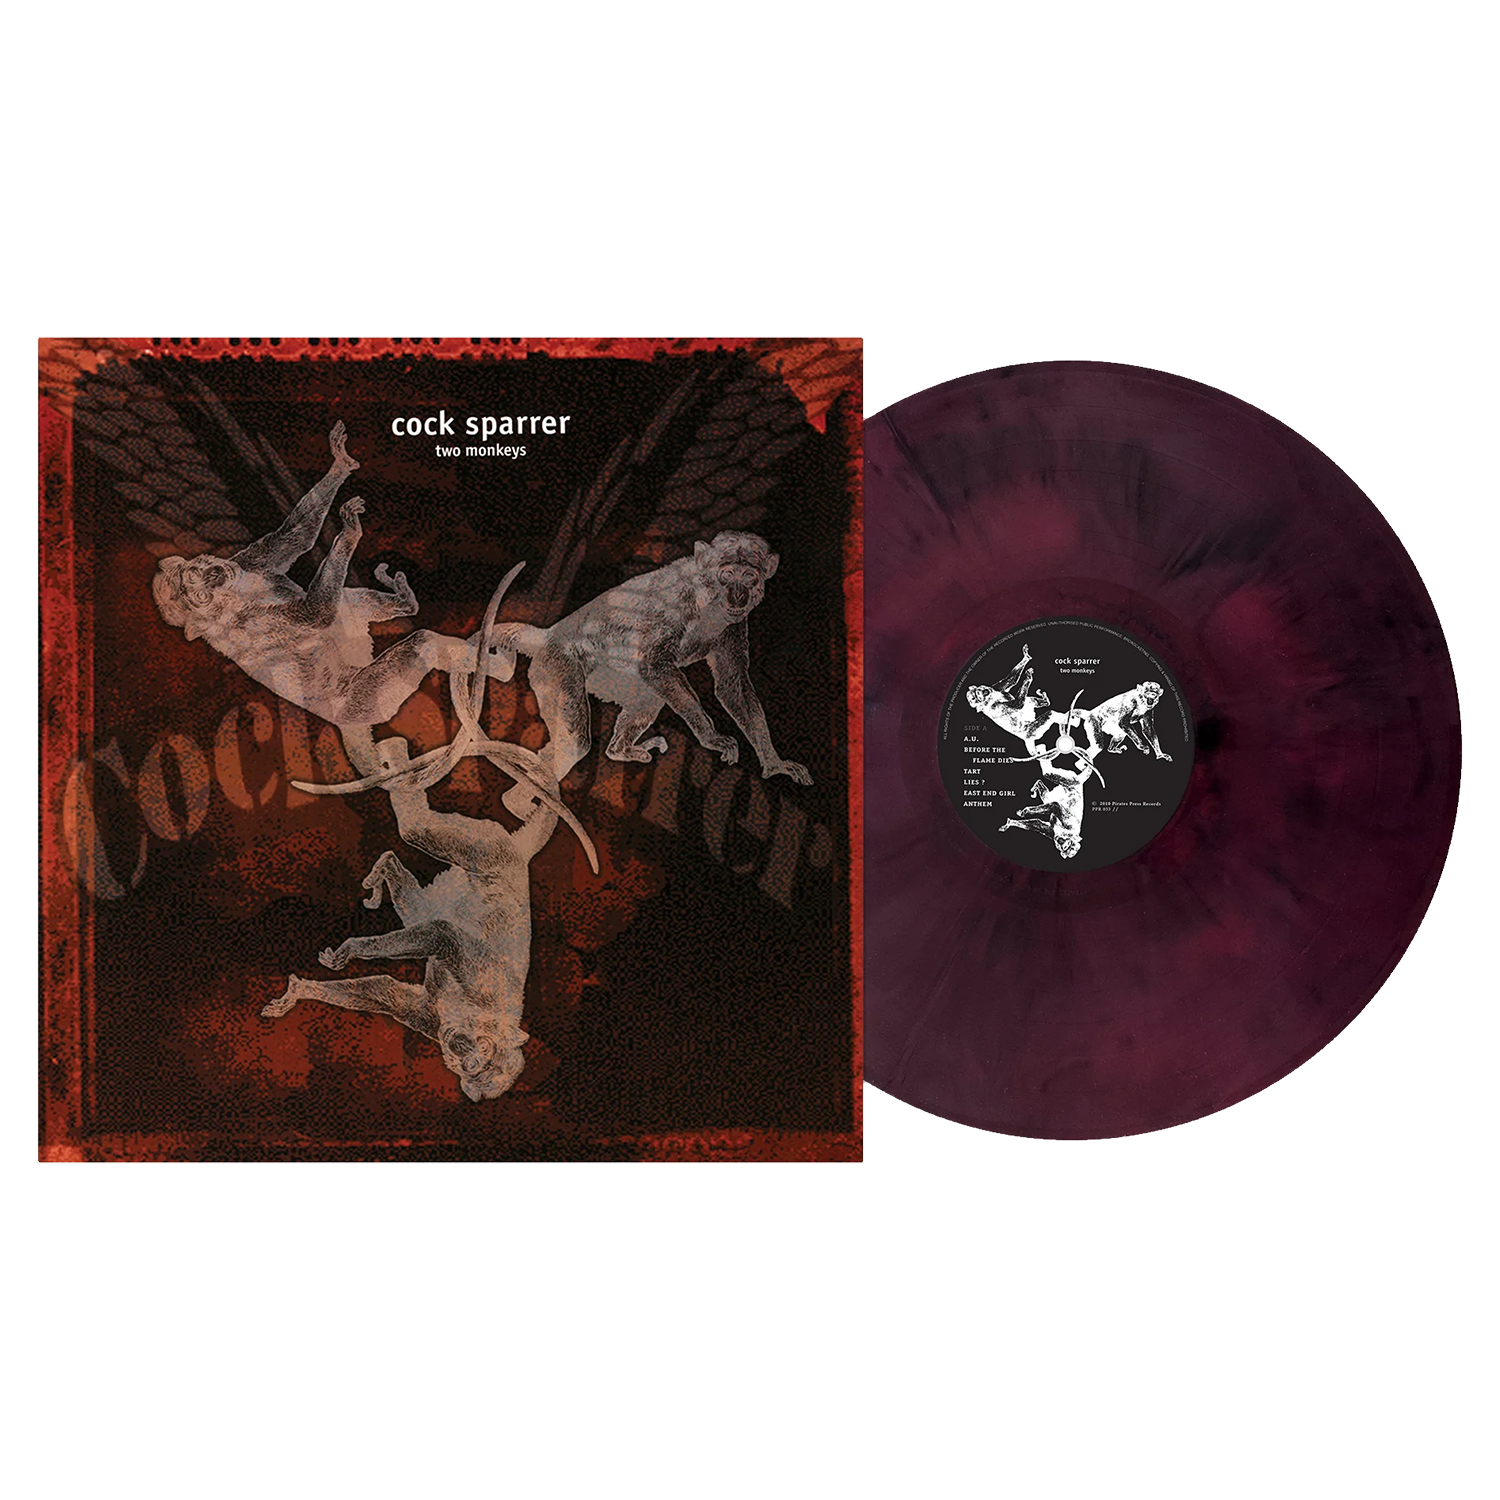 Two Monkeys (Oxblood/Black vinyl) LP